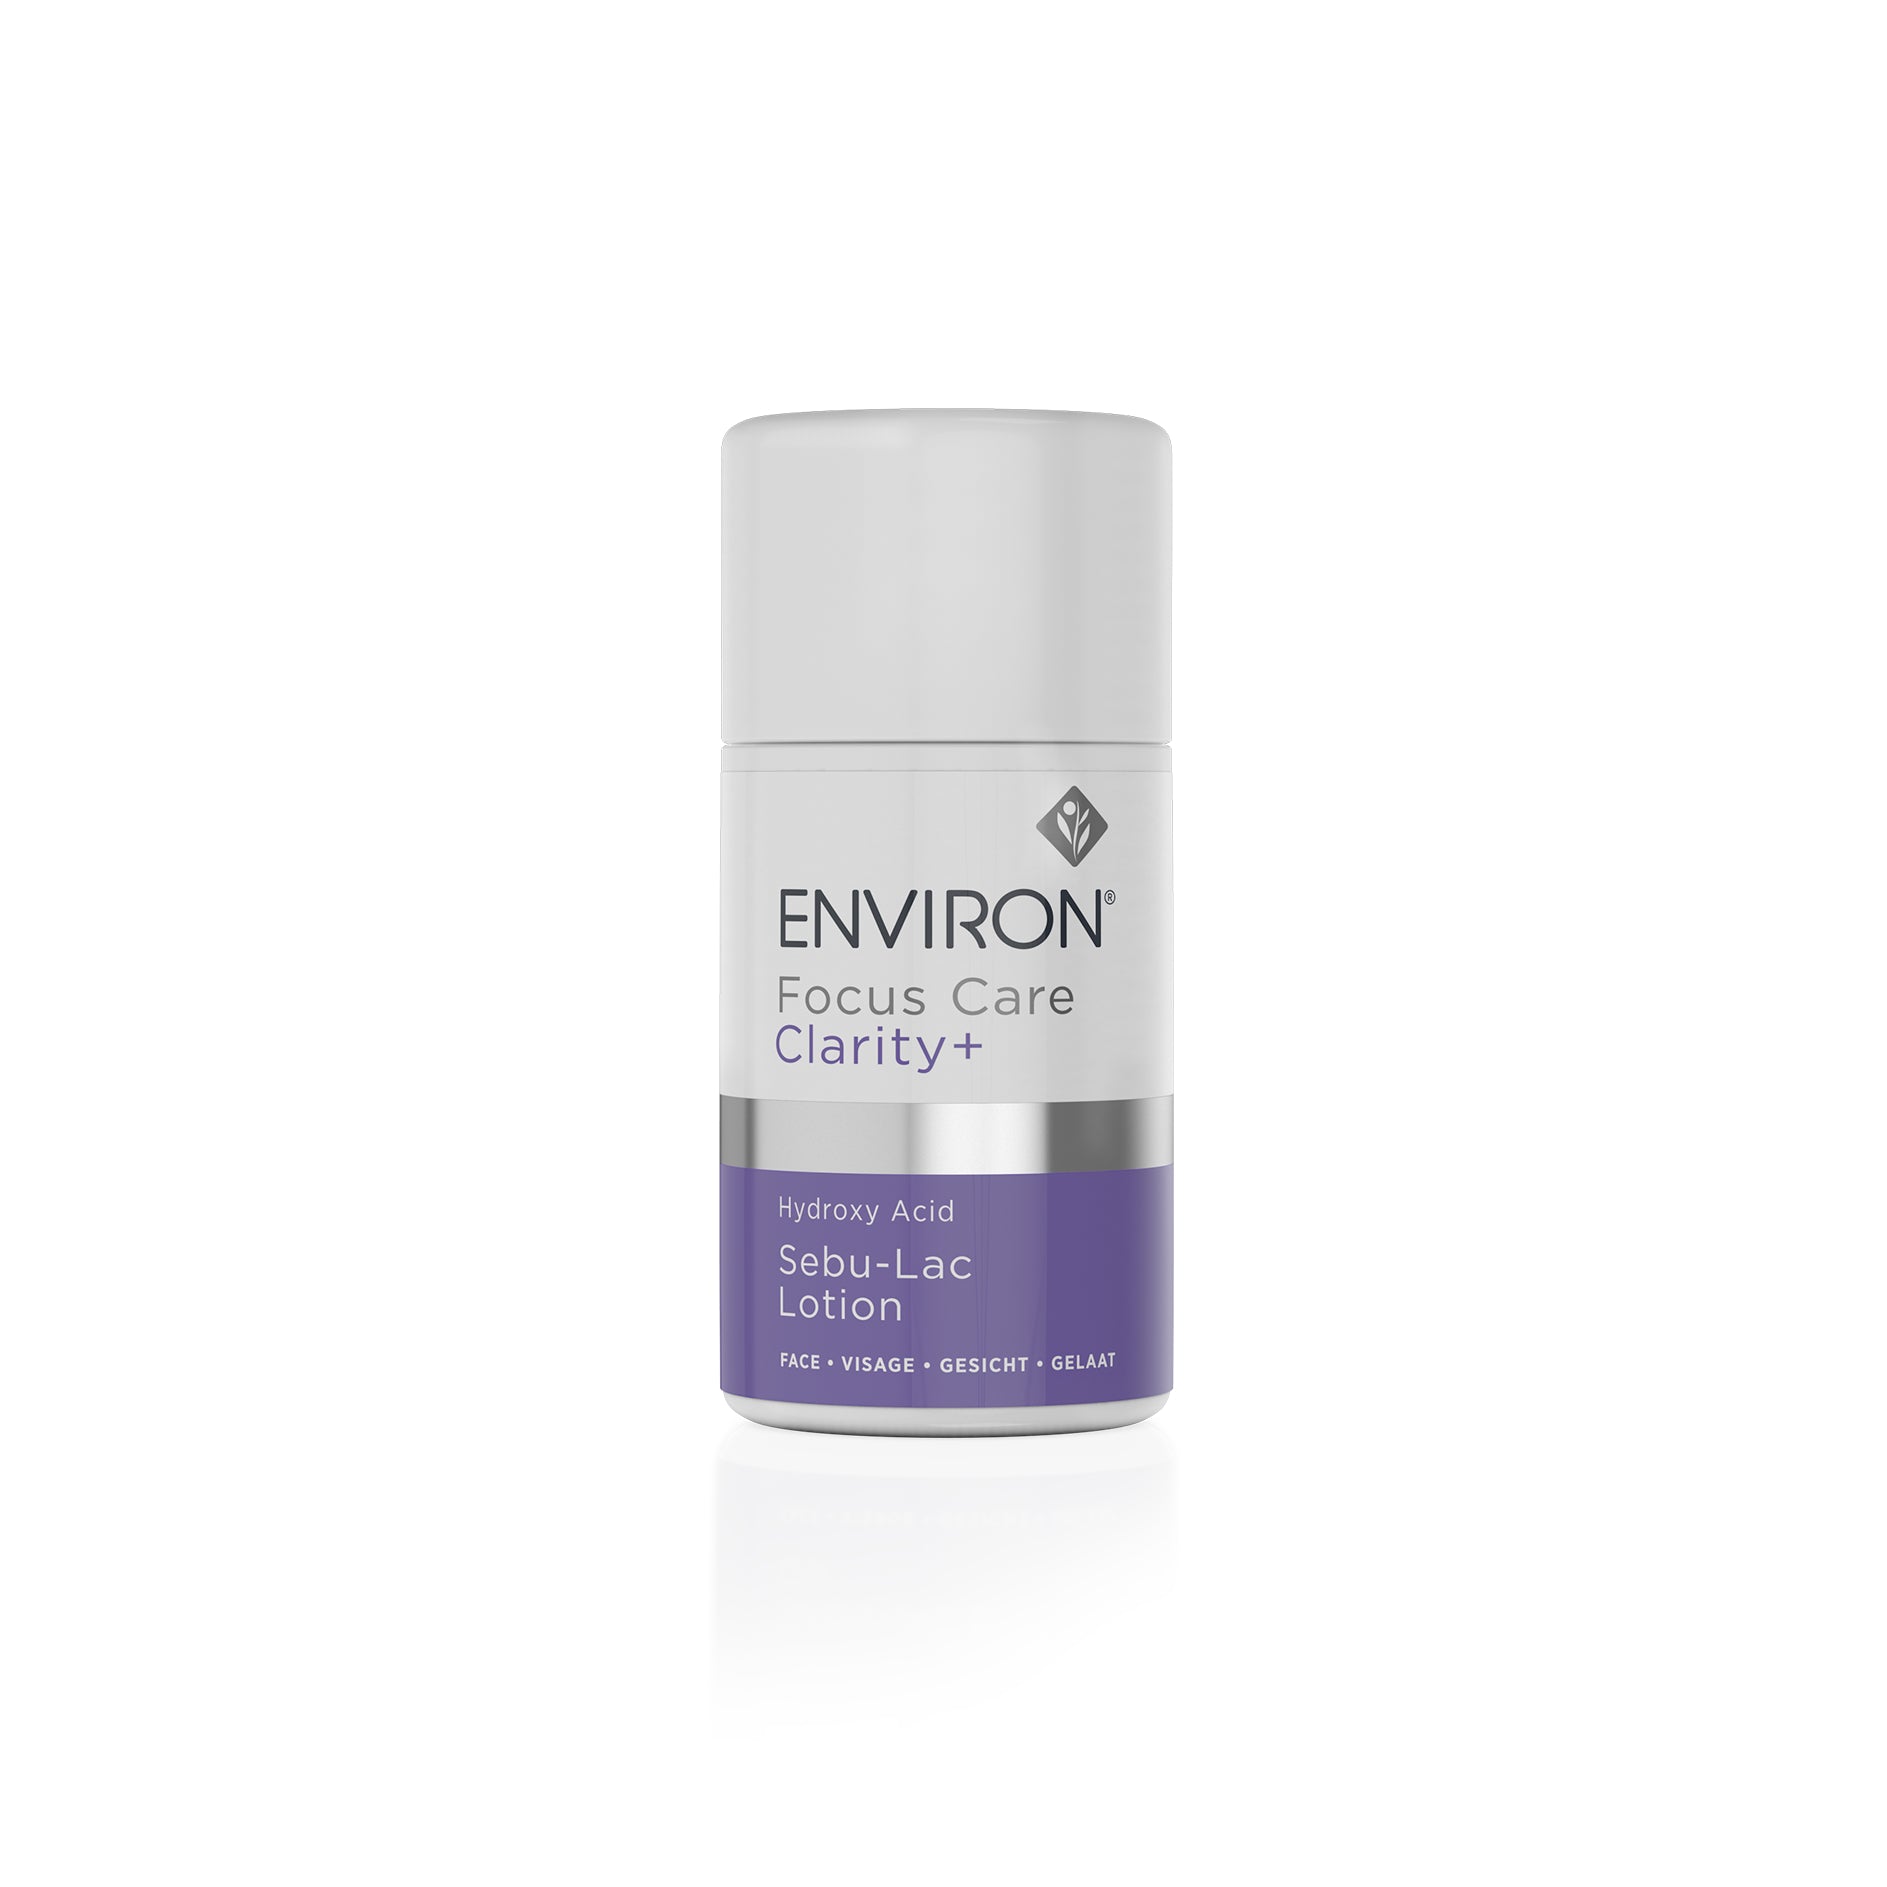 Environ Focus Care™ Clarity+ range - Hydroxy Acid Sebu-Lac Lotion